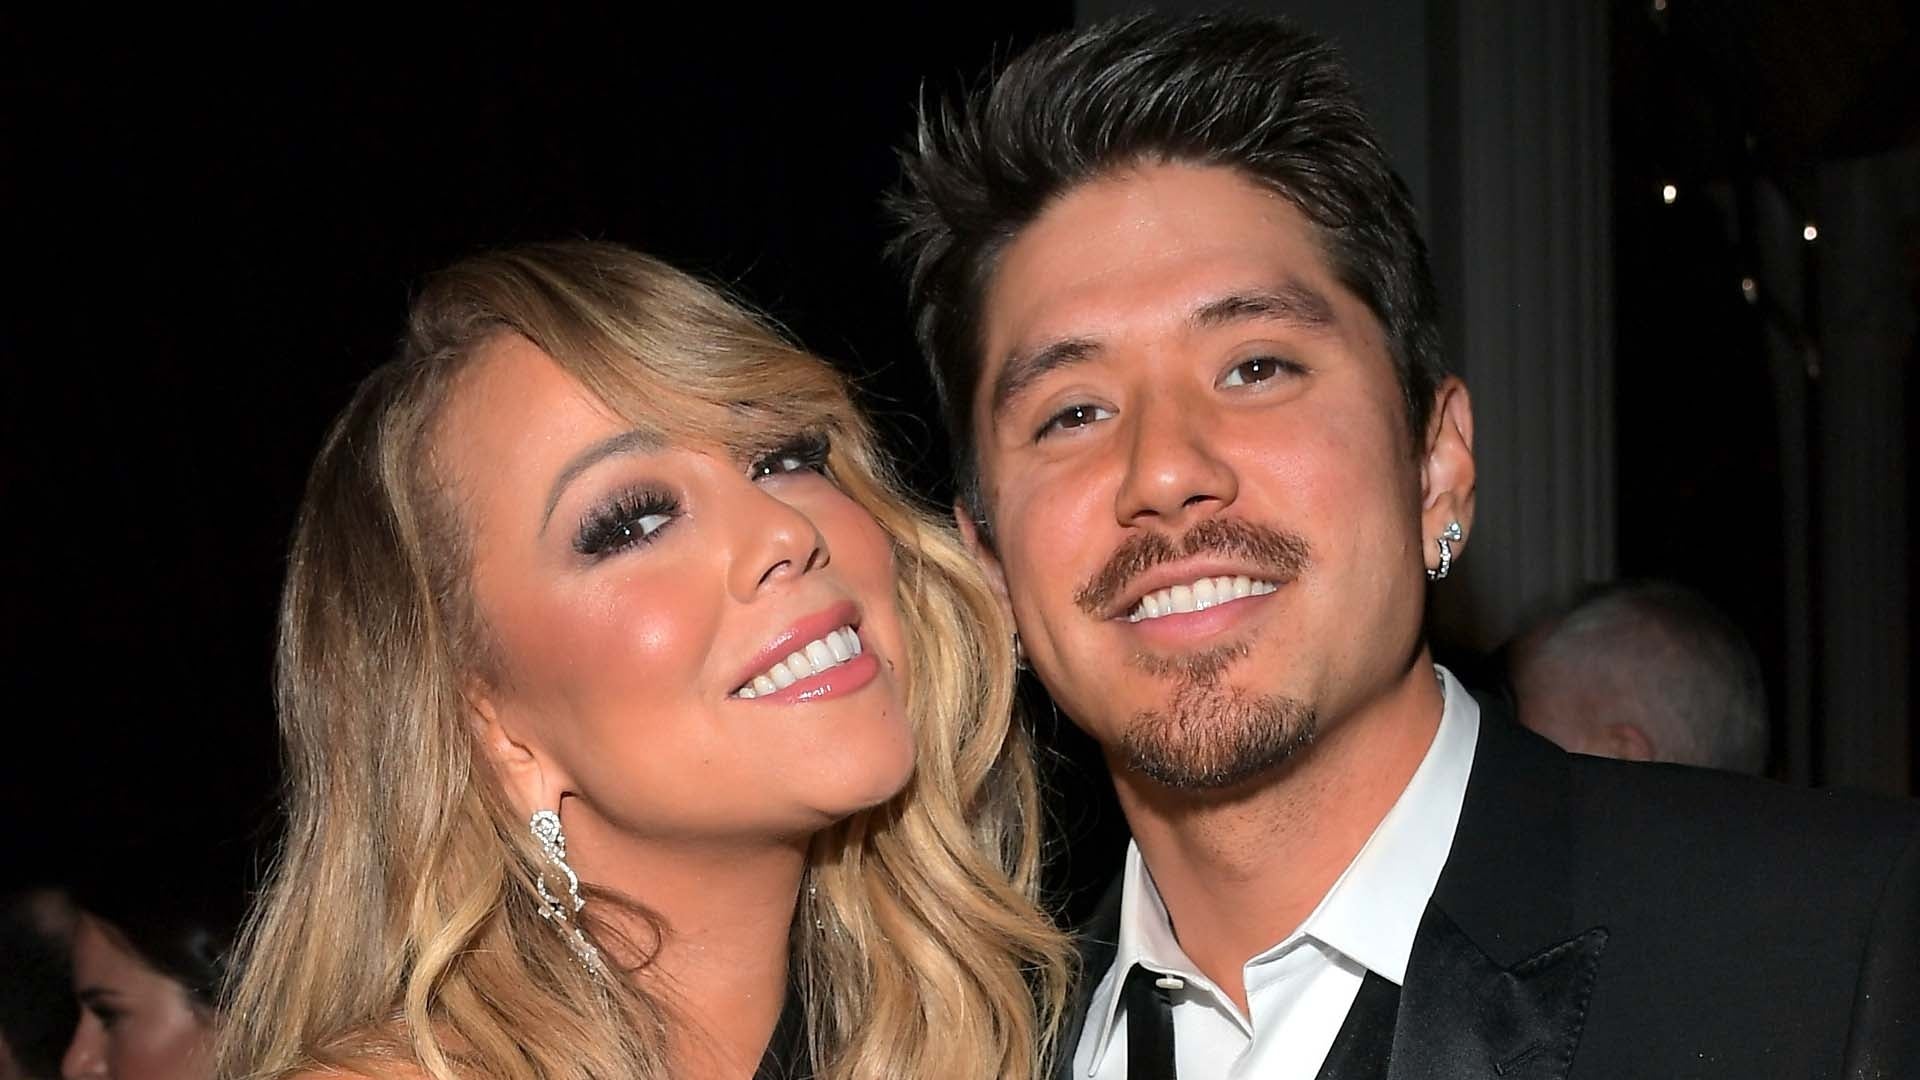 Mariah Carey and Bryan Tanaka Spark Breakup Rumors After 7 Years of Dating